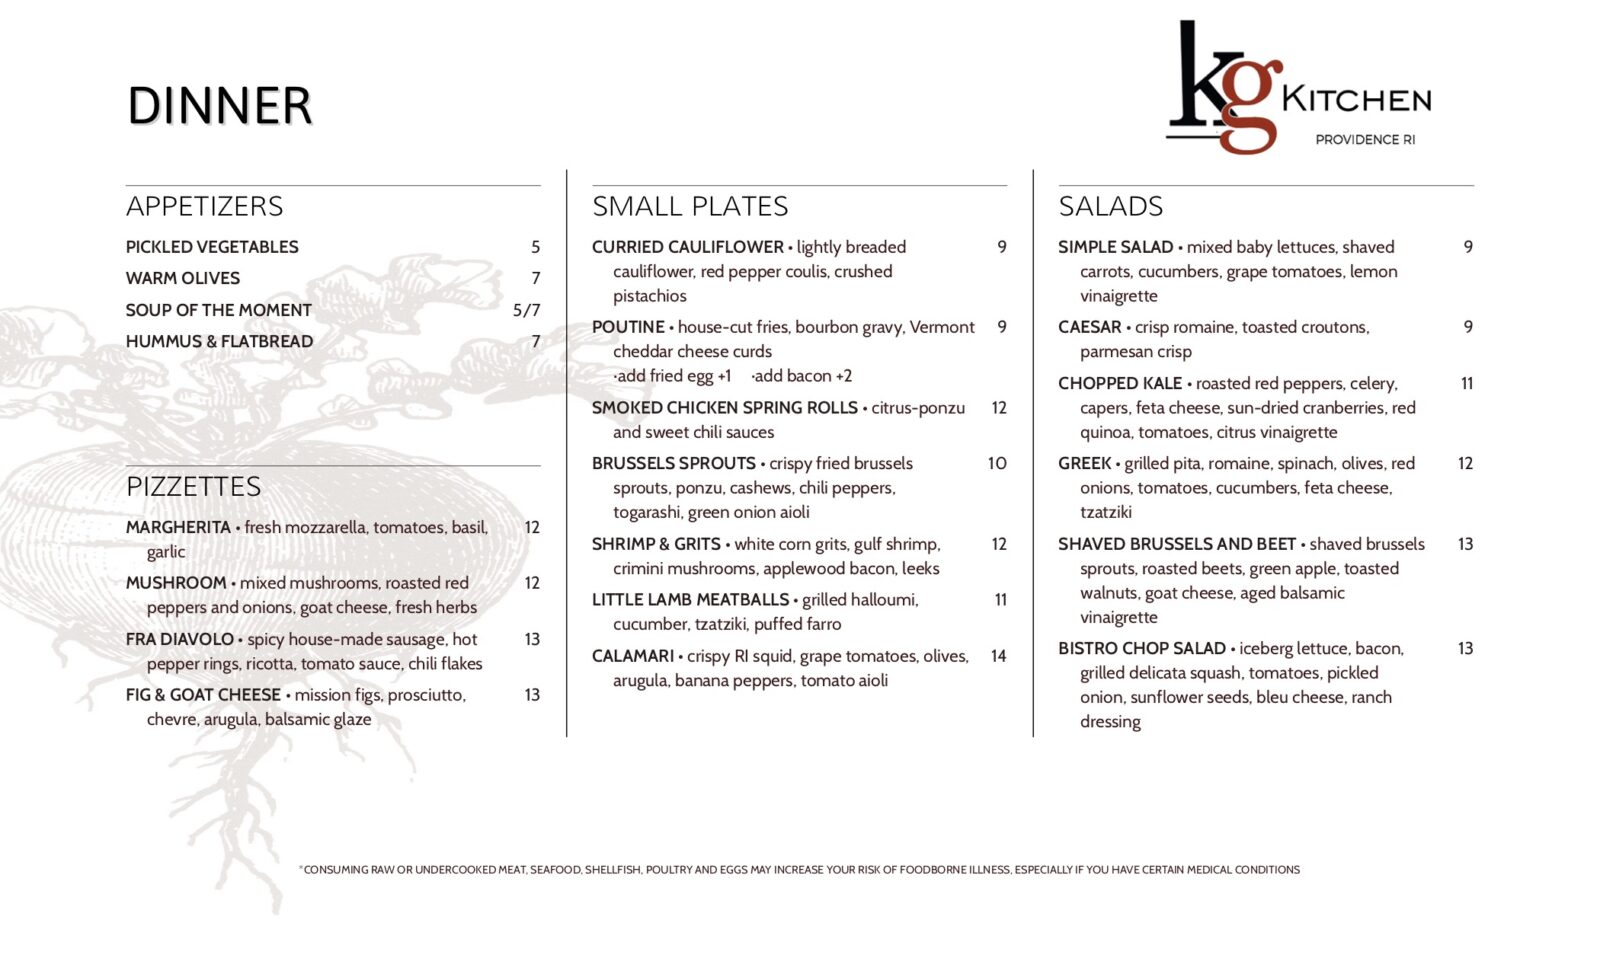 kg kitchen bar menu